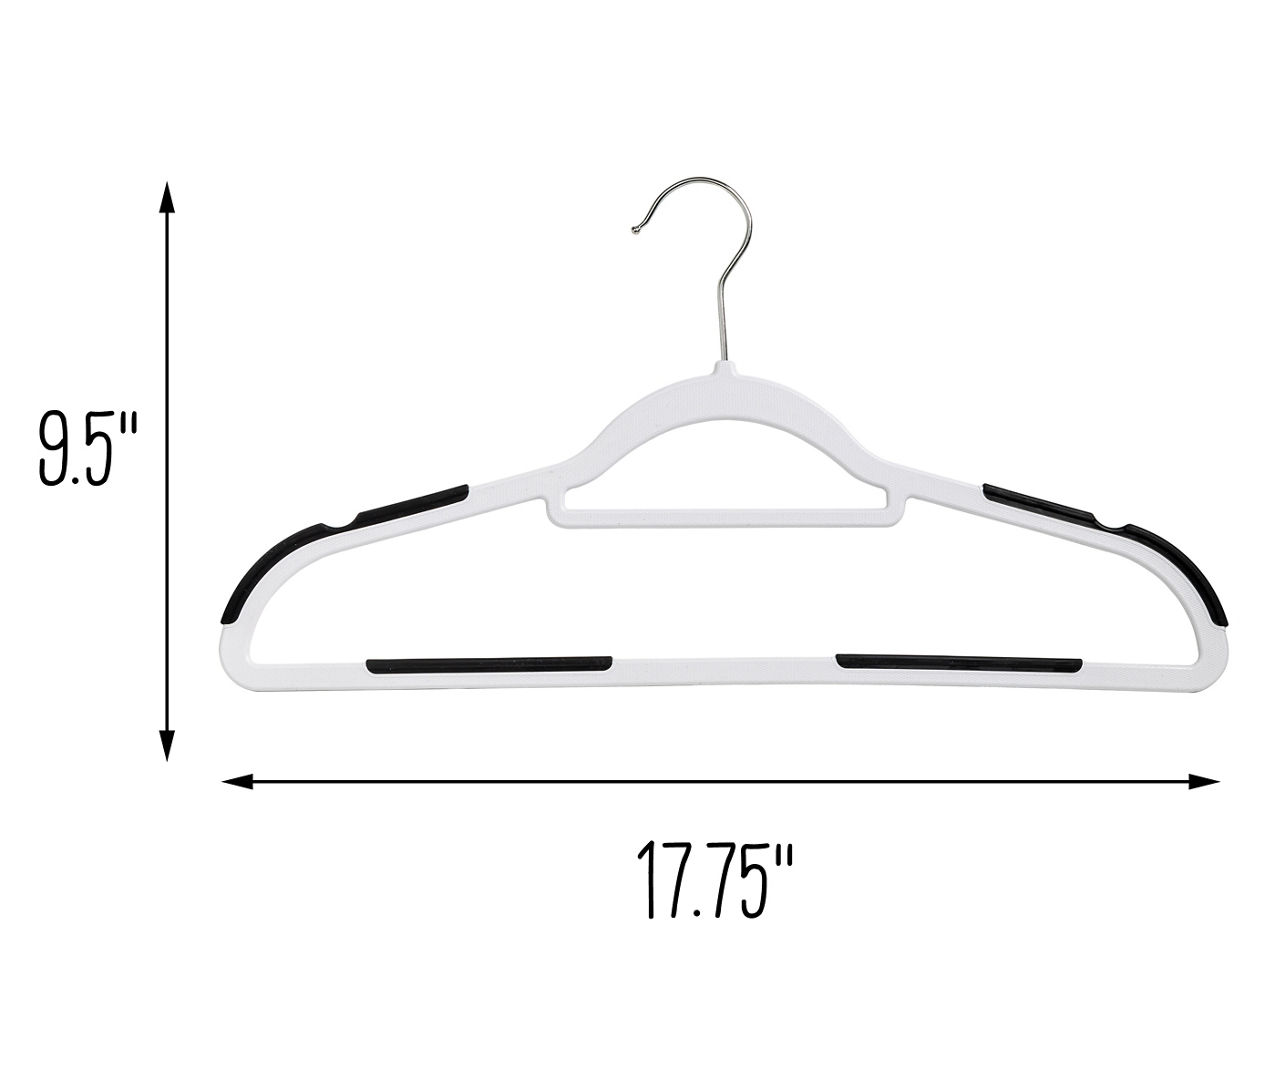 White Slim Anti-Slip Hangers, 50-Count